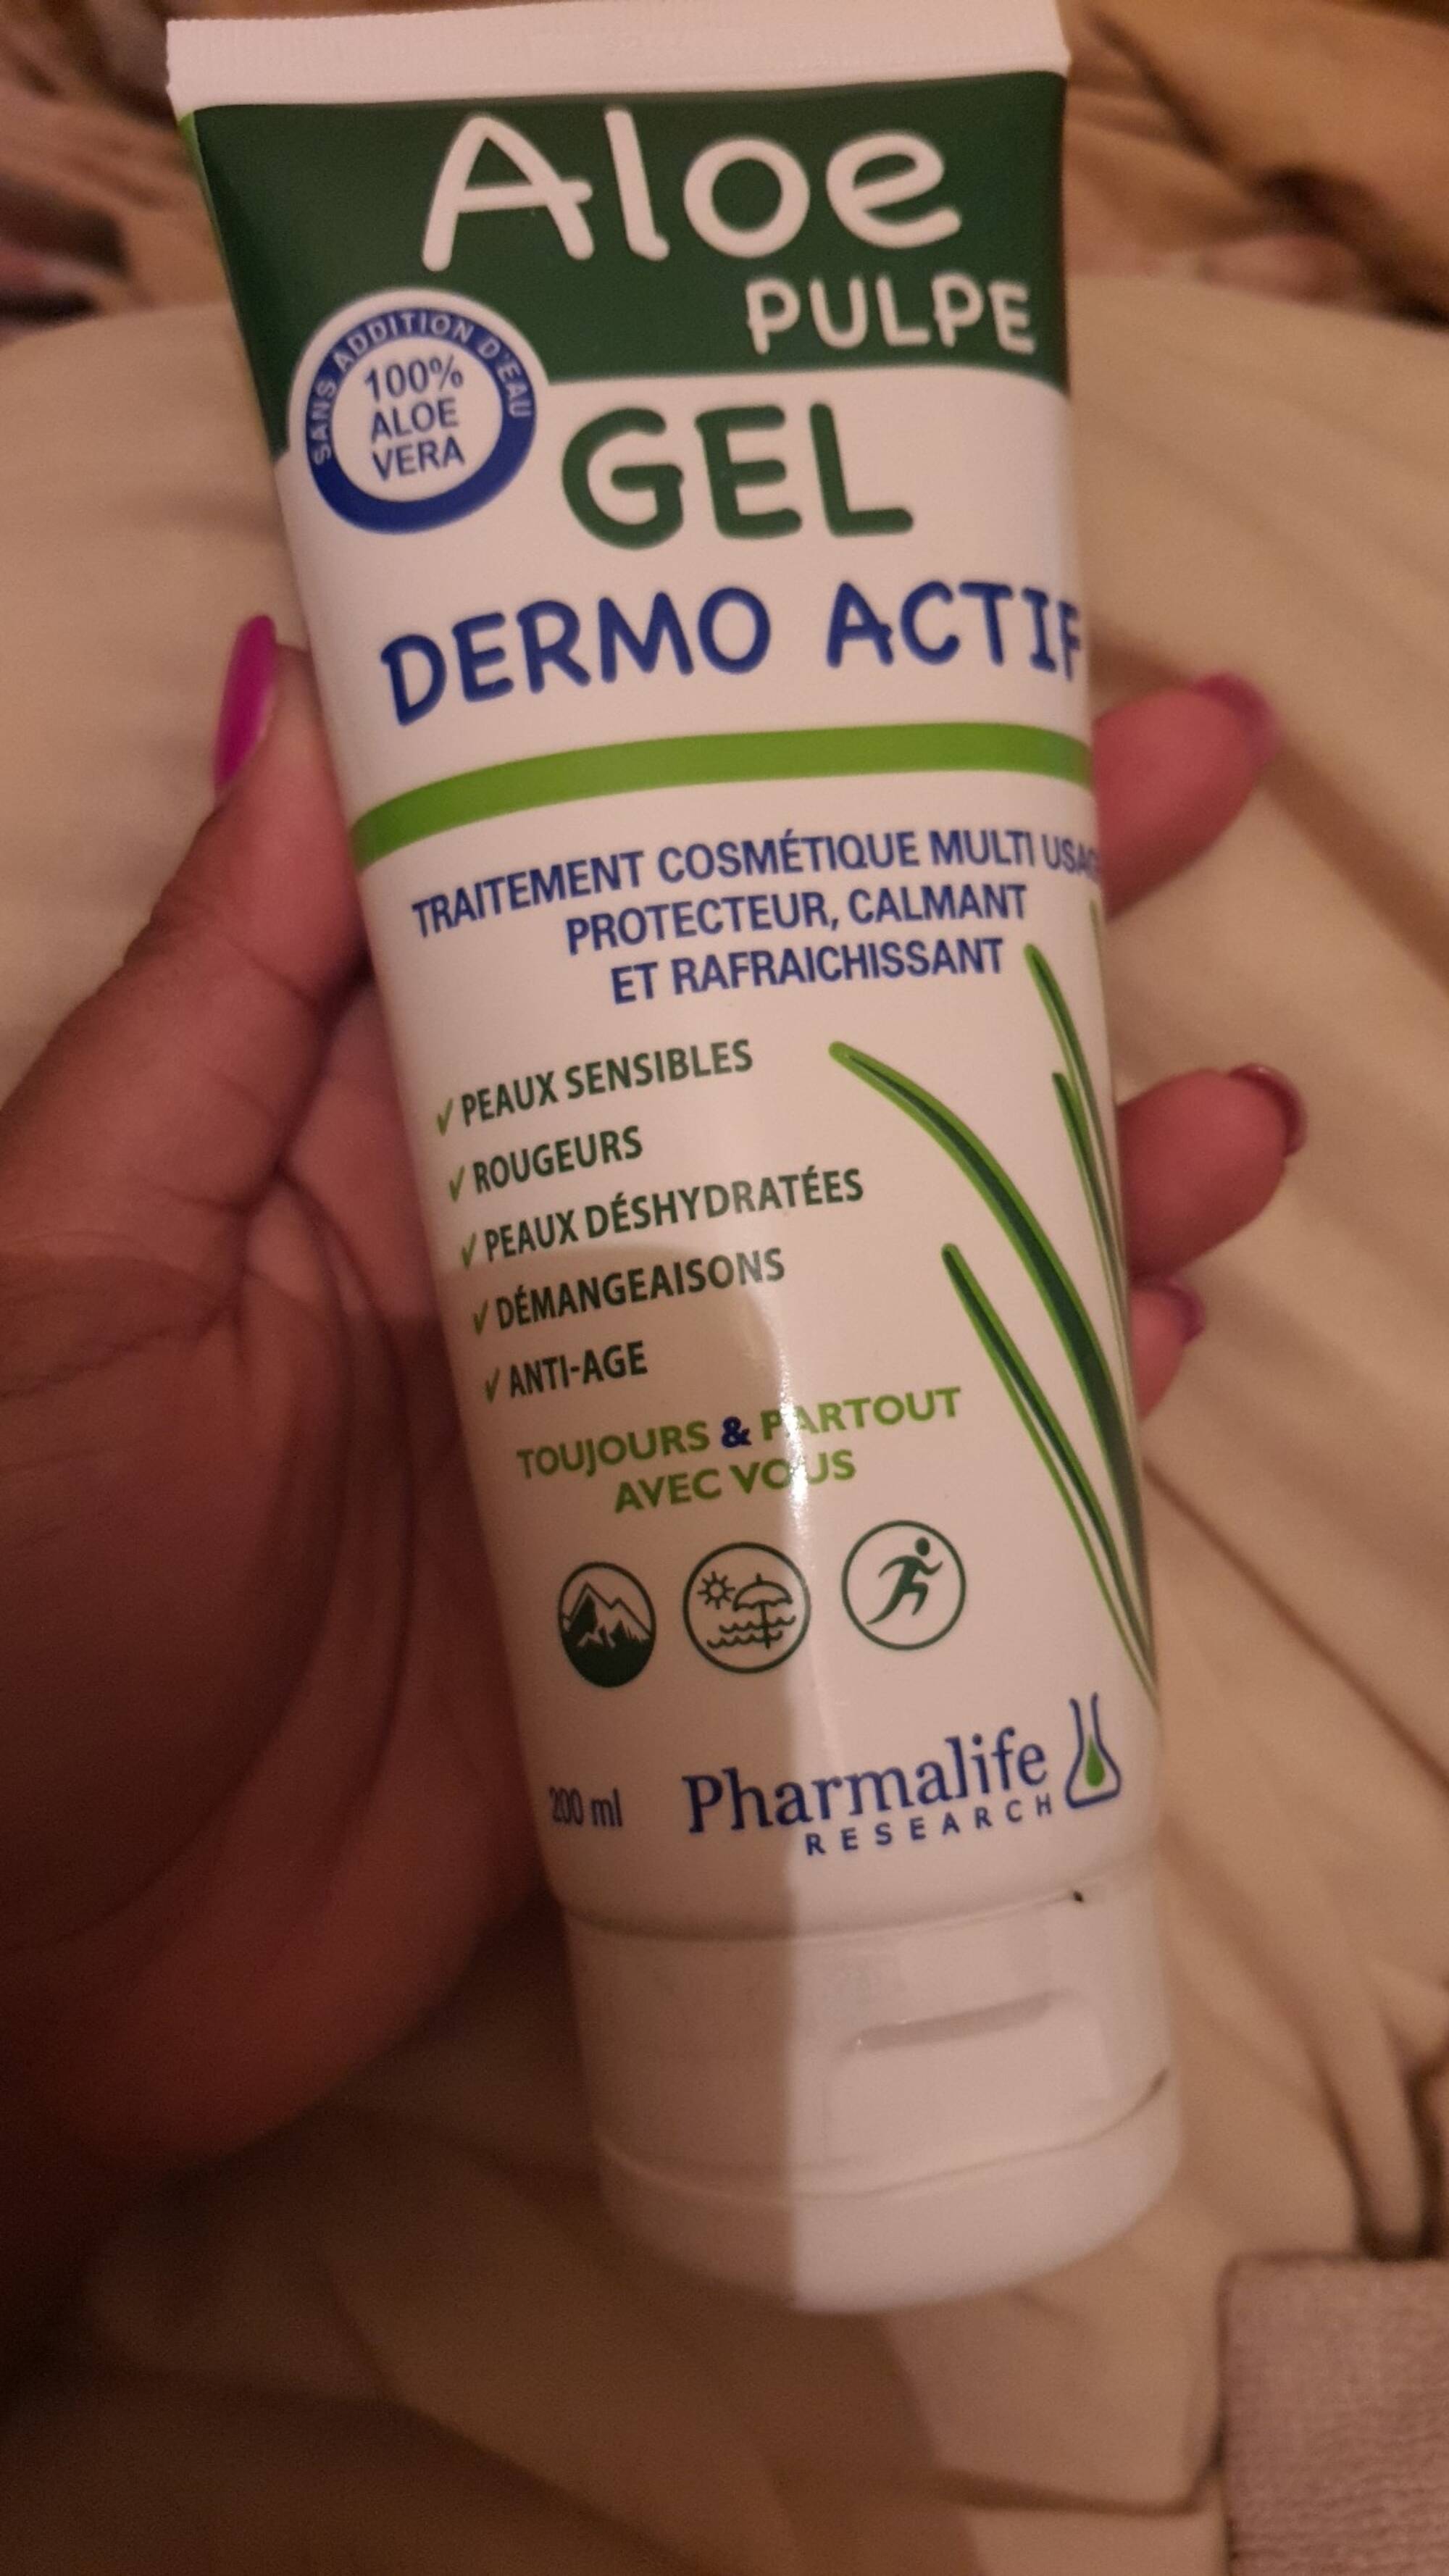 PHARMALIFE - Aloe pulpe - Gel dermo actif